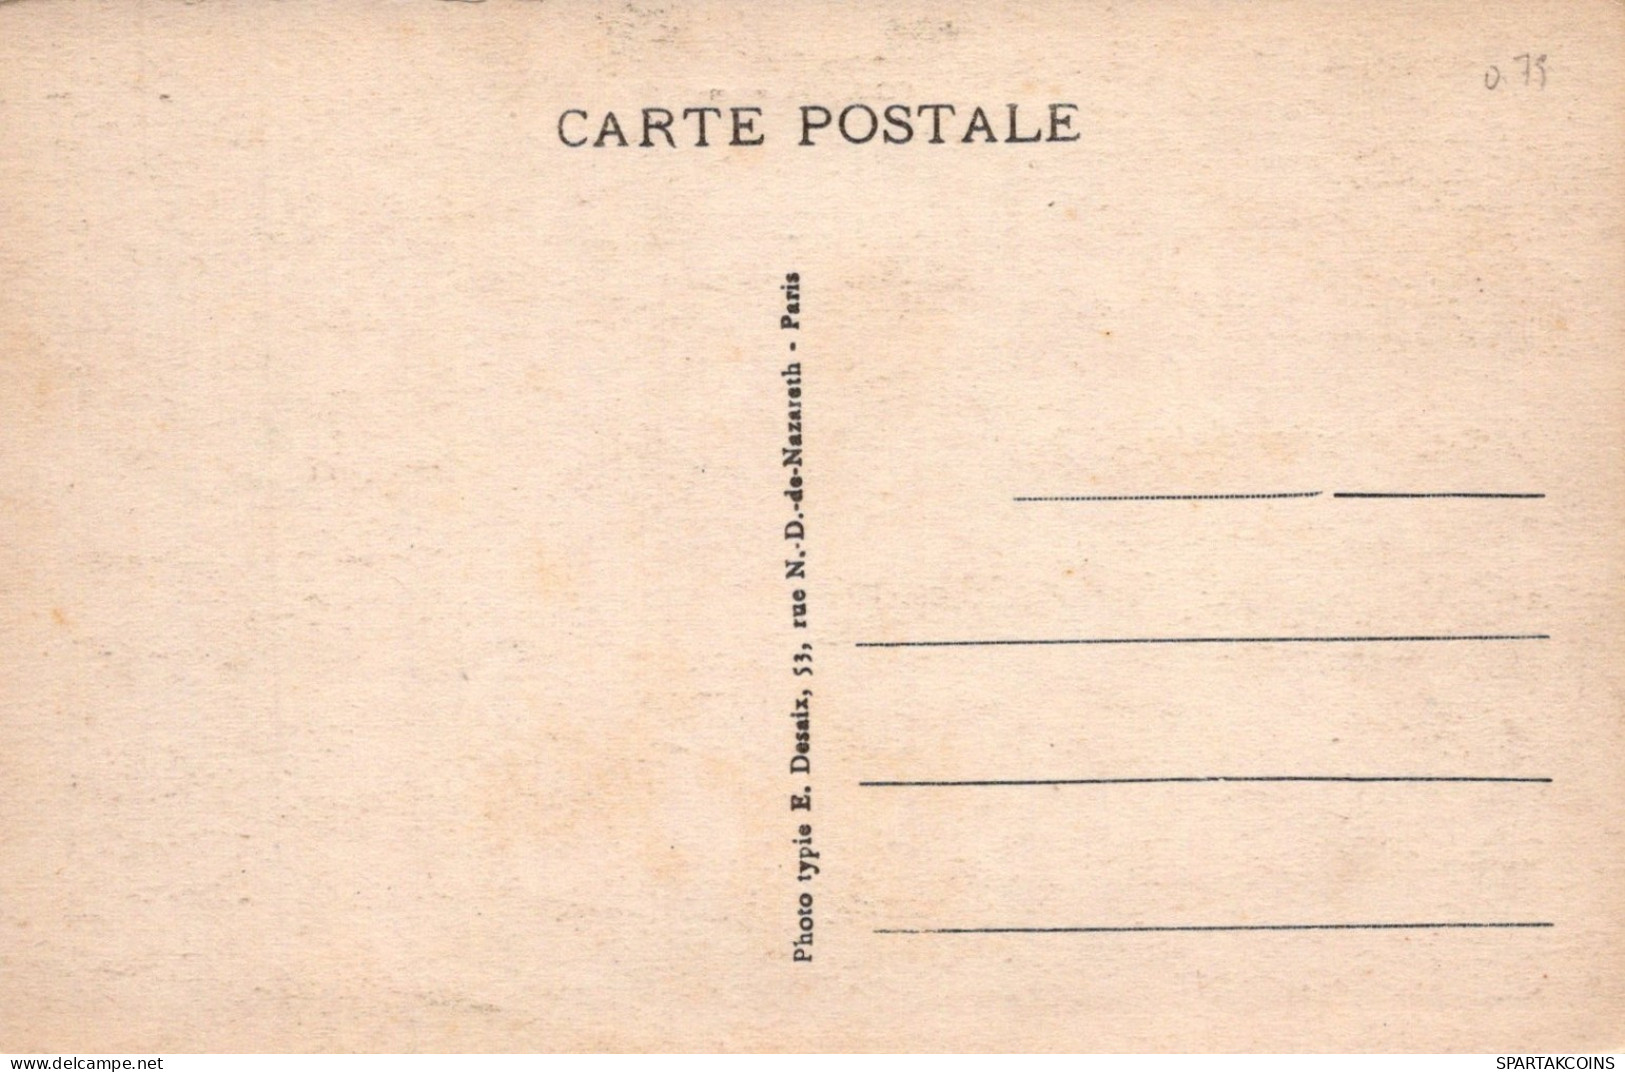 BELGIEN COO WASSERFALL Provinz Lüttich (Liège) Postkarte CPA Unposted #PAD025.A - Stavelot